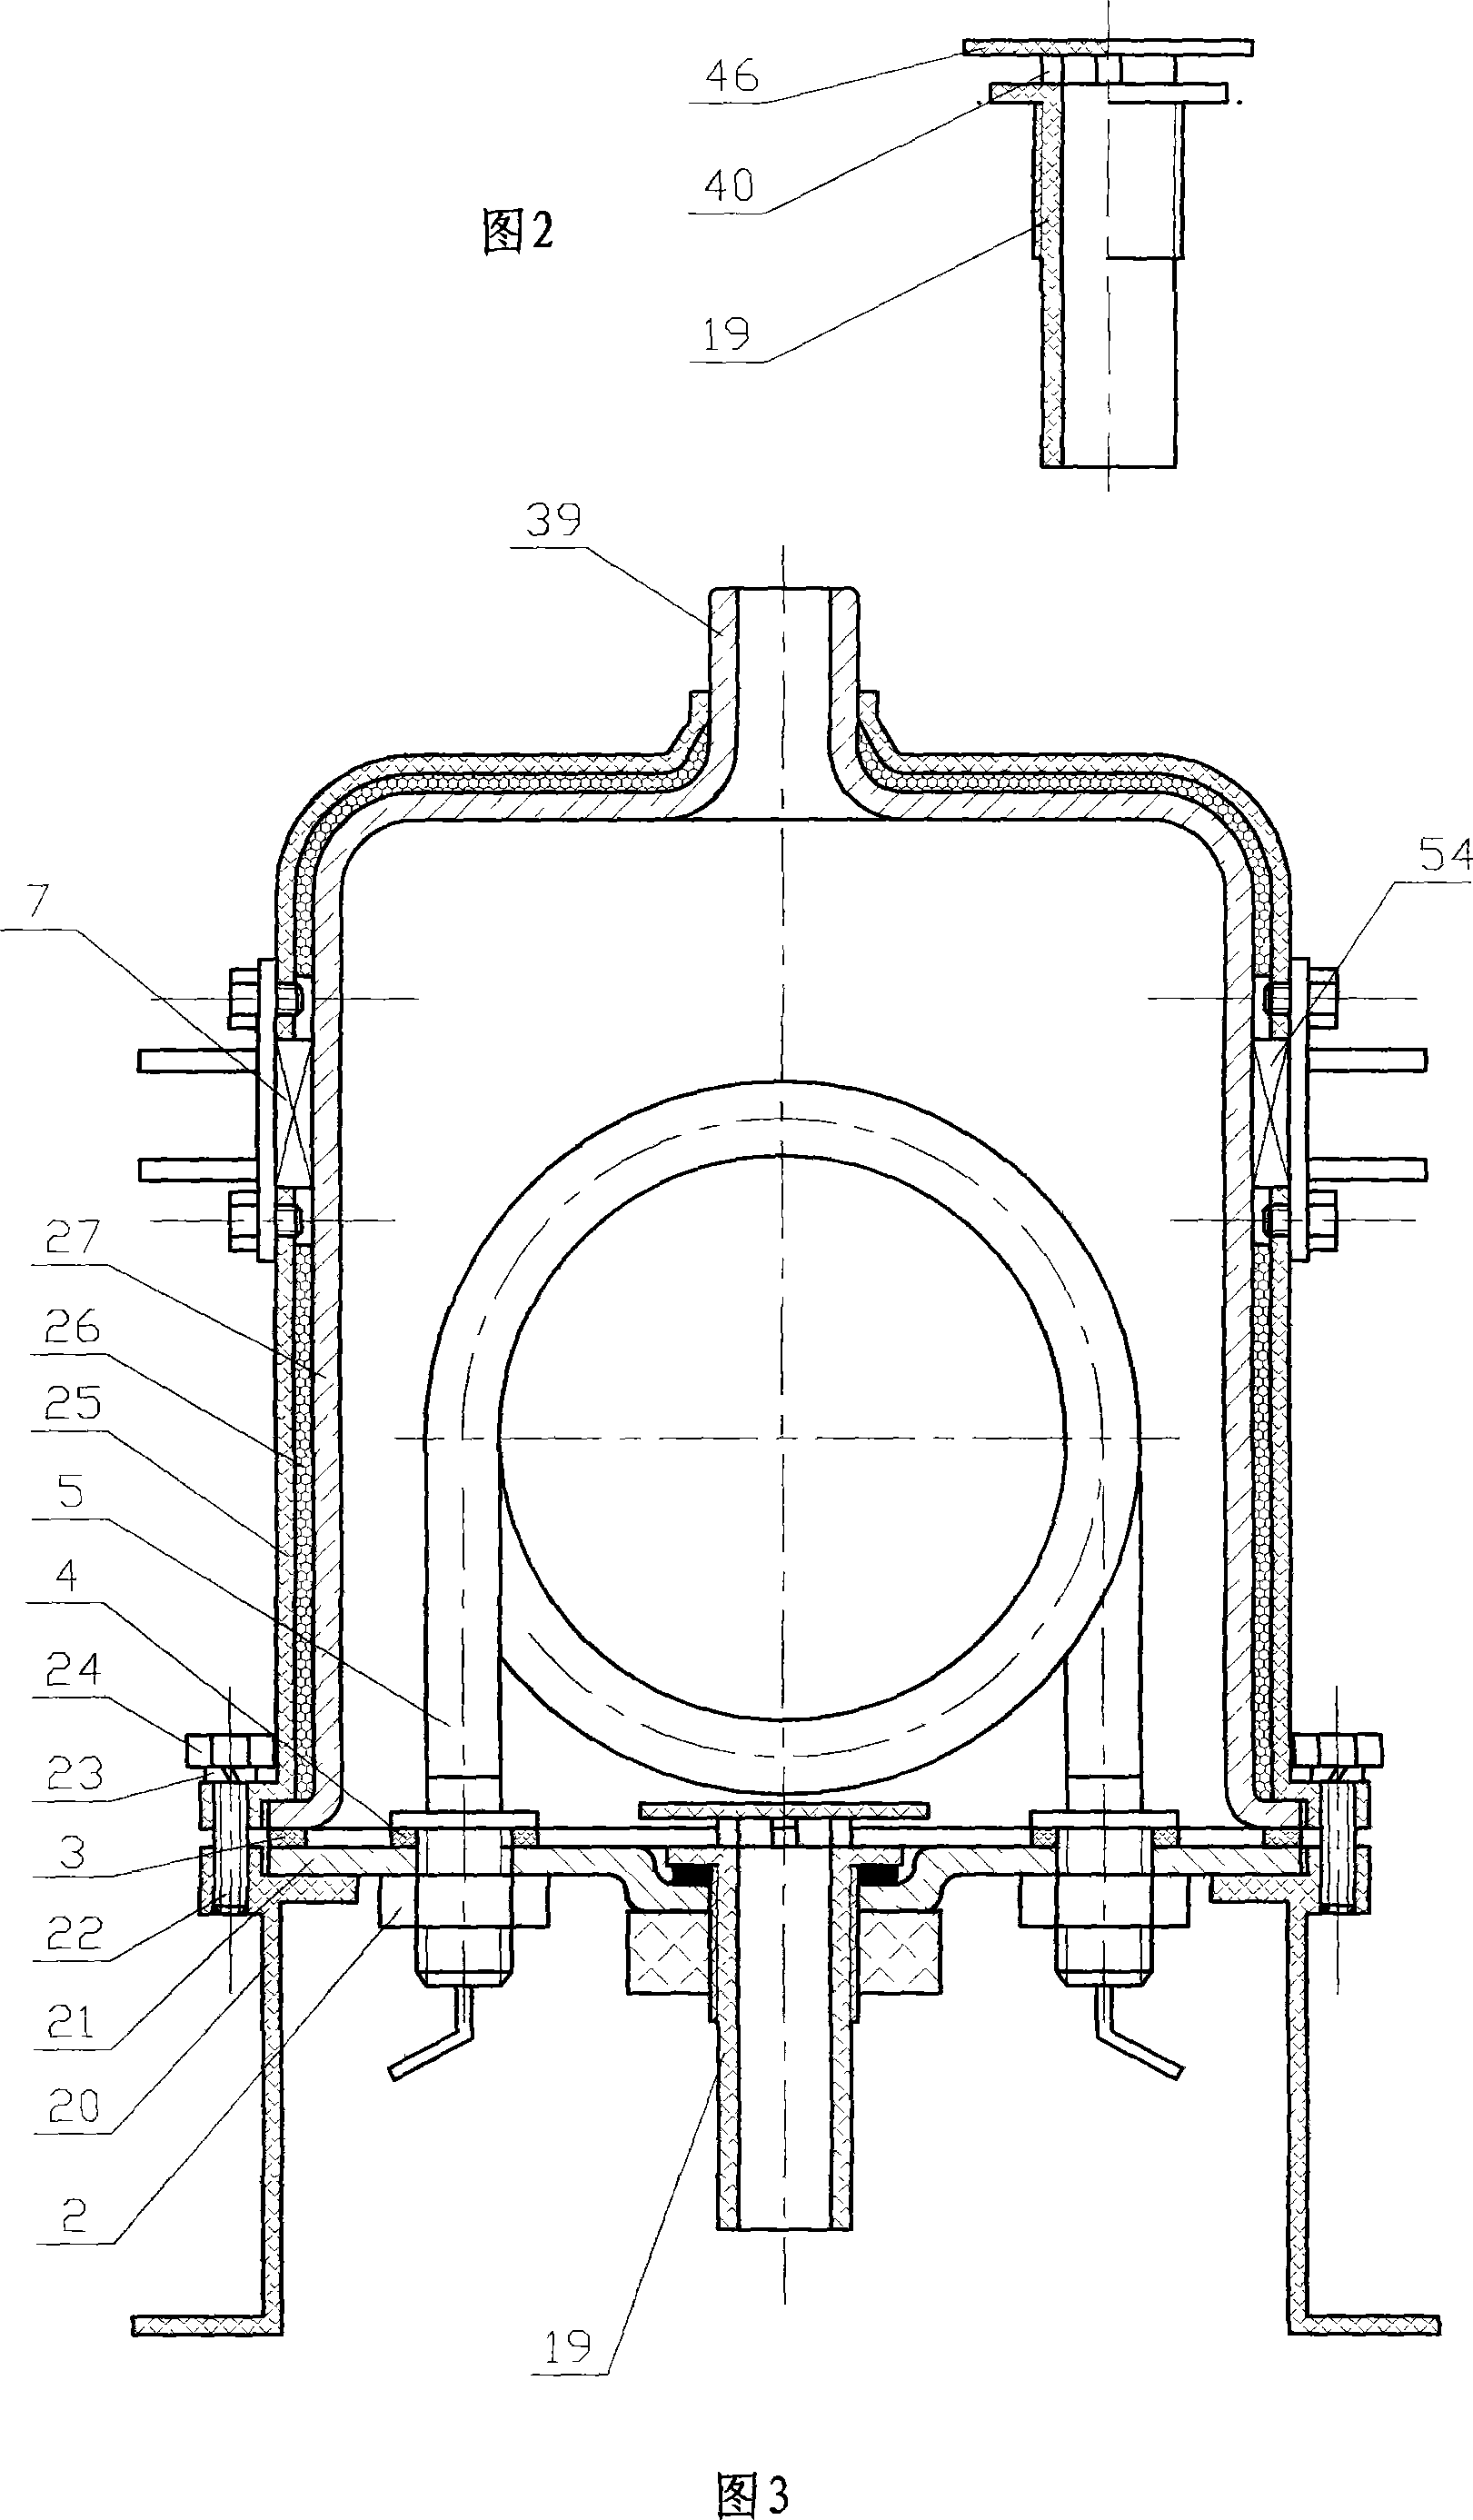 Sanitary liquid electrical heating tank